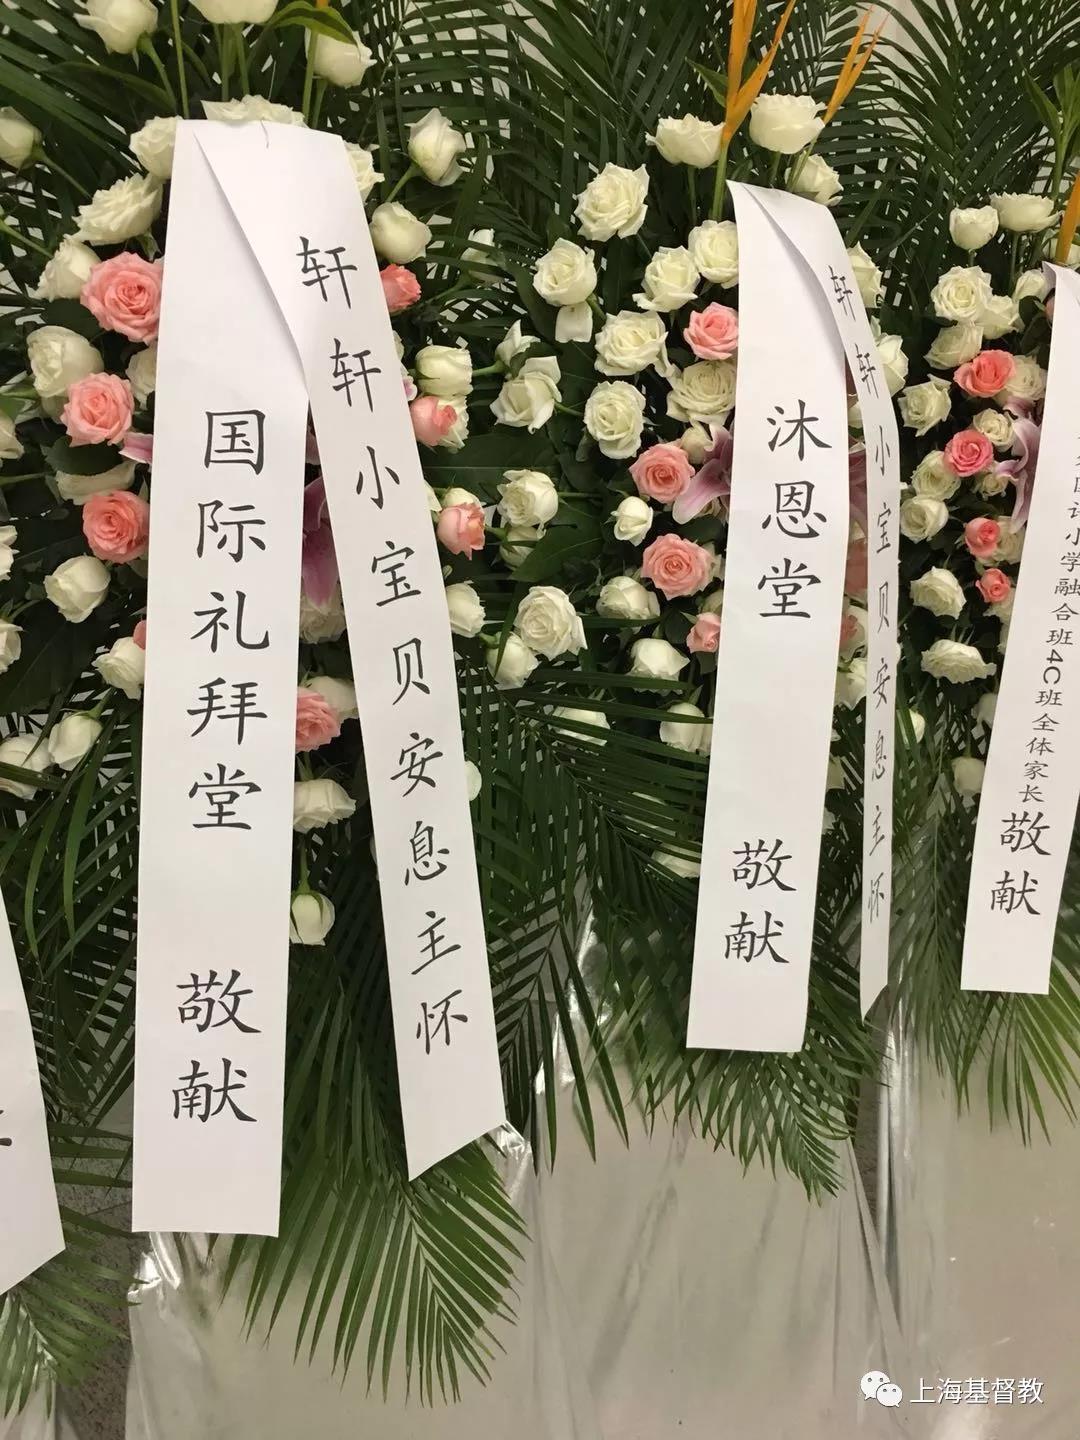 The wreaths sent by Shanghai Community Fellowship and Moore Memorial Church